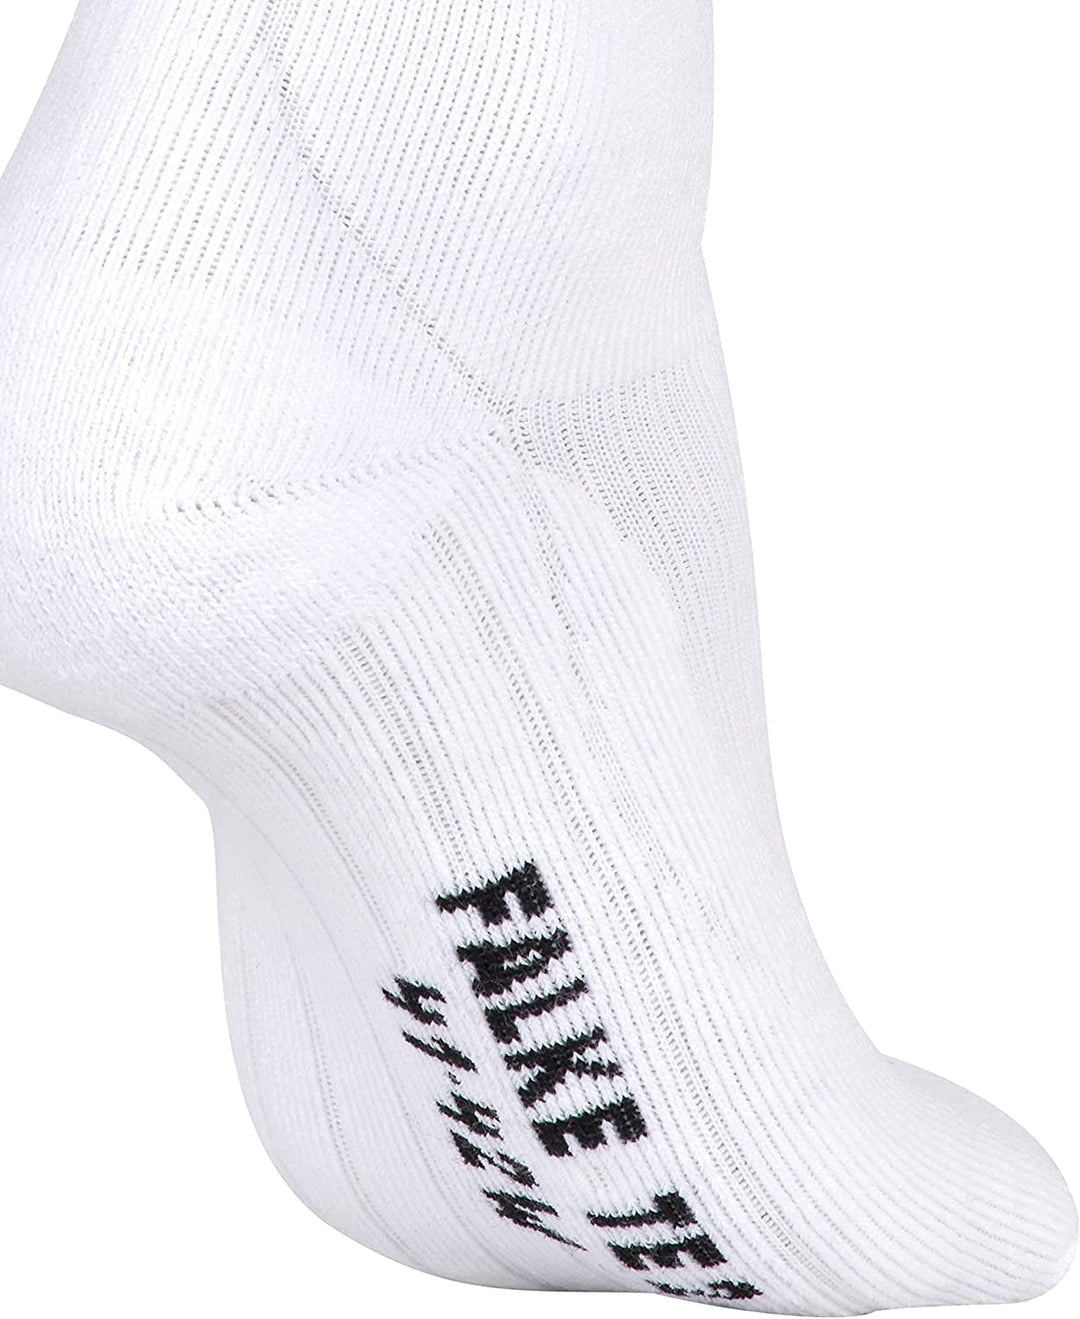 FALKE Damen Tennis TE2 kurze Socken – Baumwollmischung, Weiß (White 2000), UK 5,5–6.